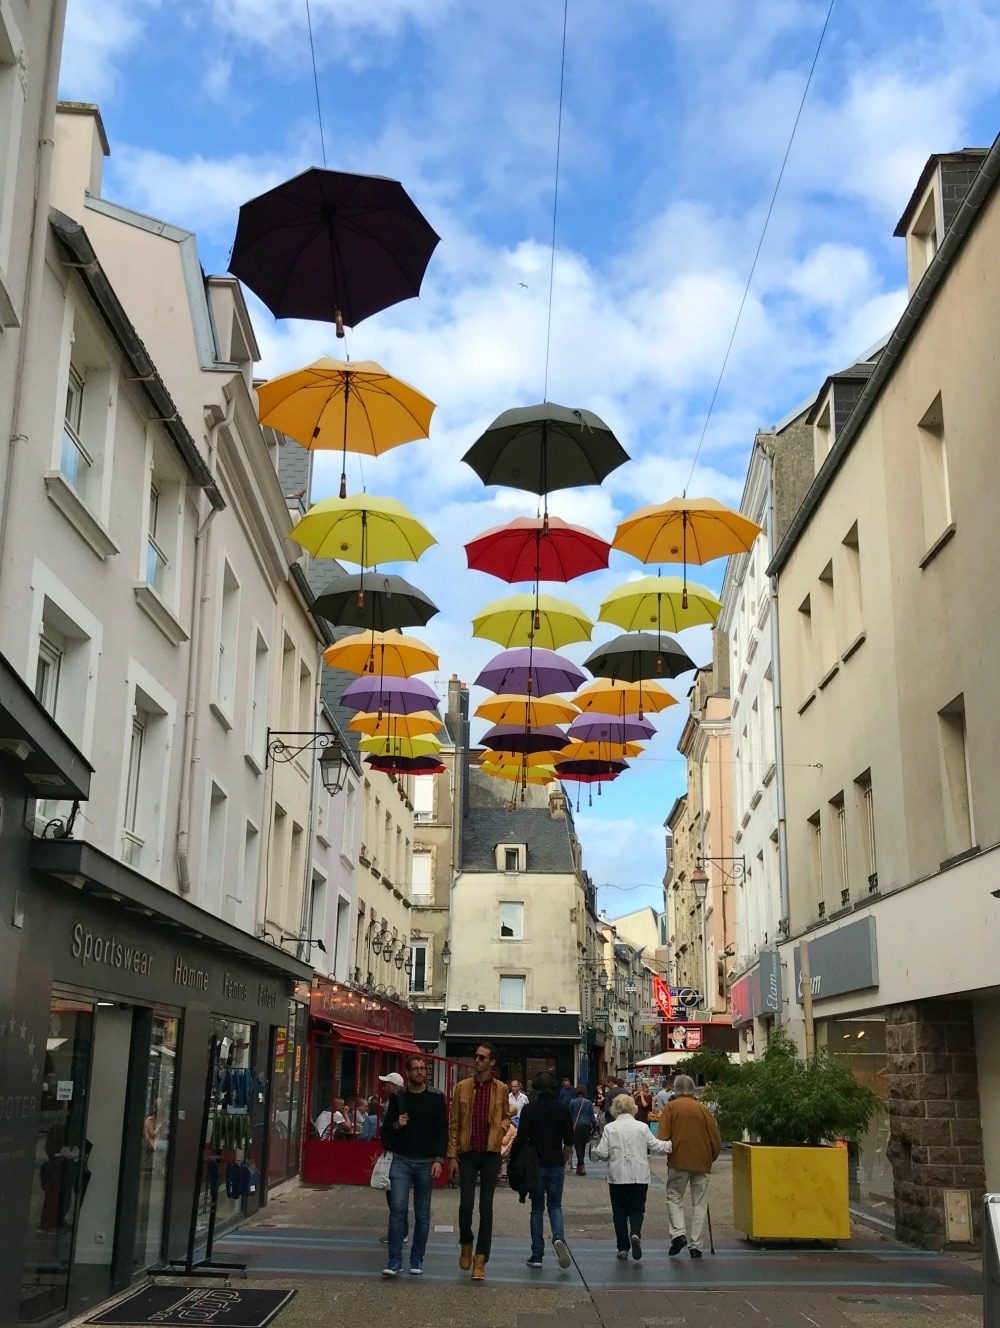 Parapluies of Cherbourg with Azamara Pursuit